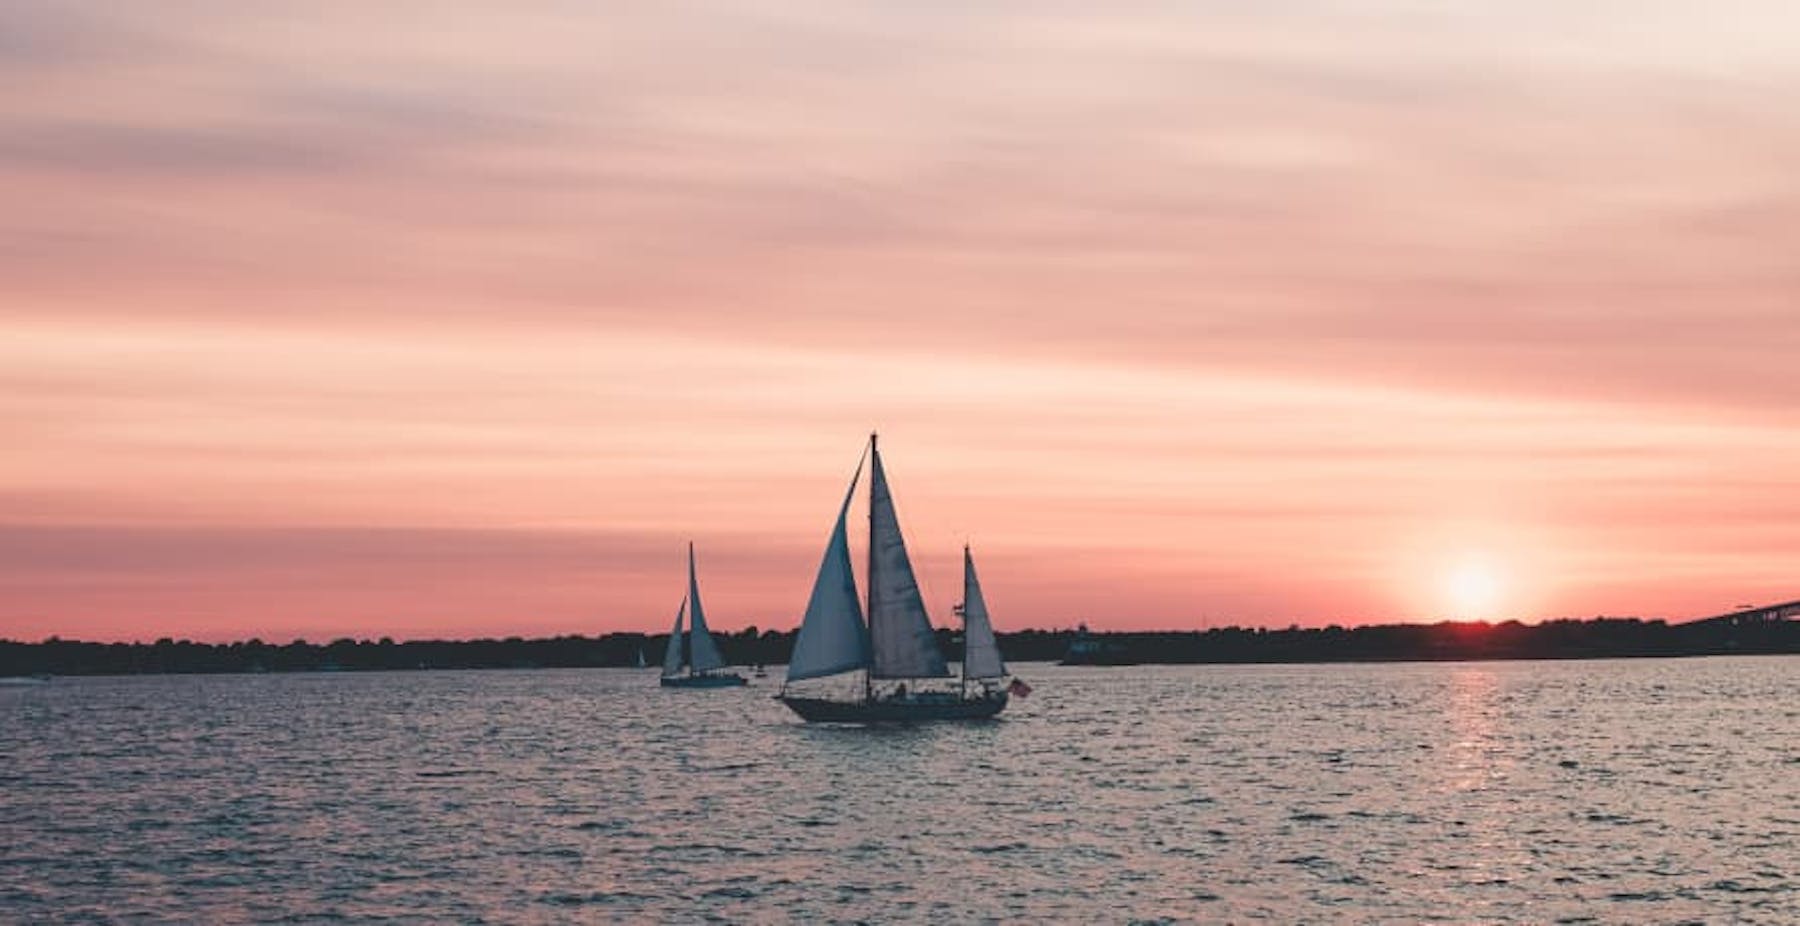 sunset sailboats in rhode island pink sky